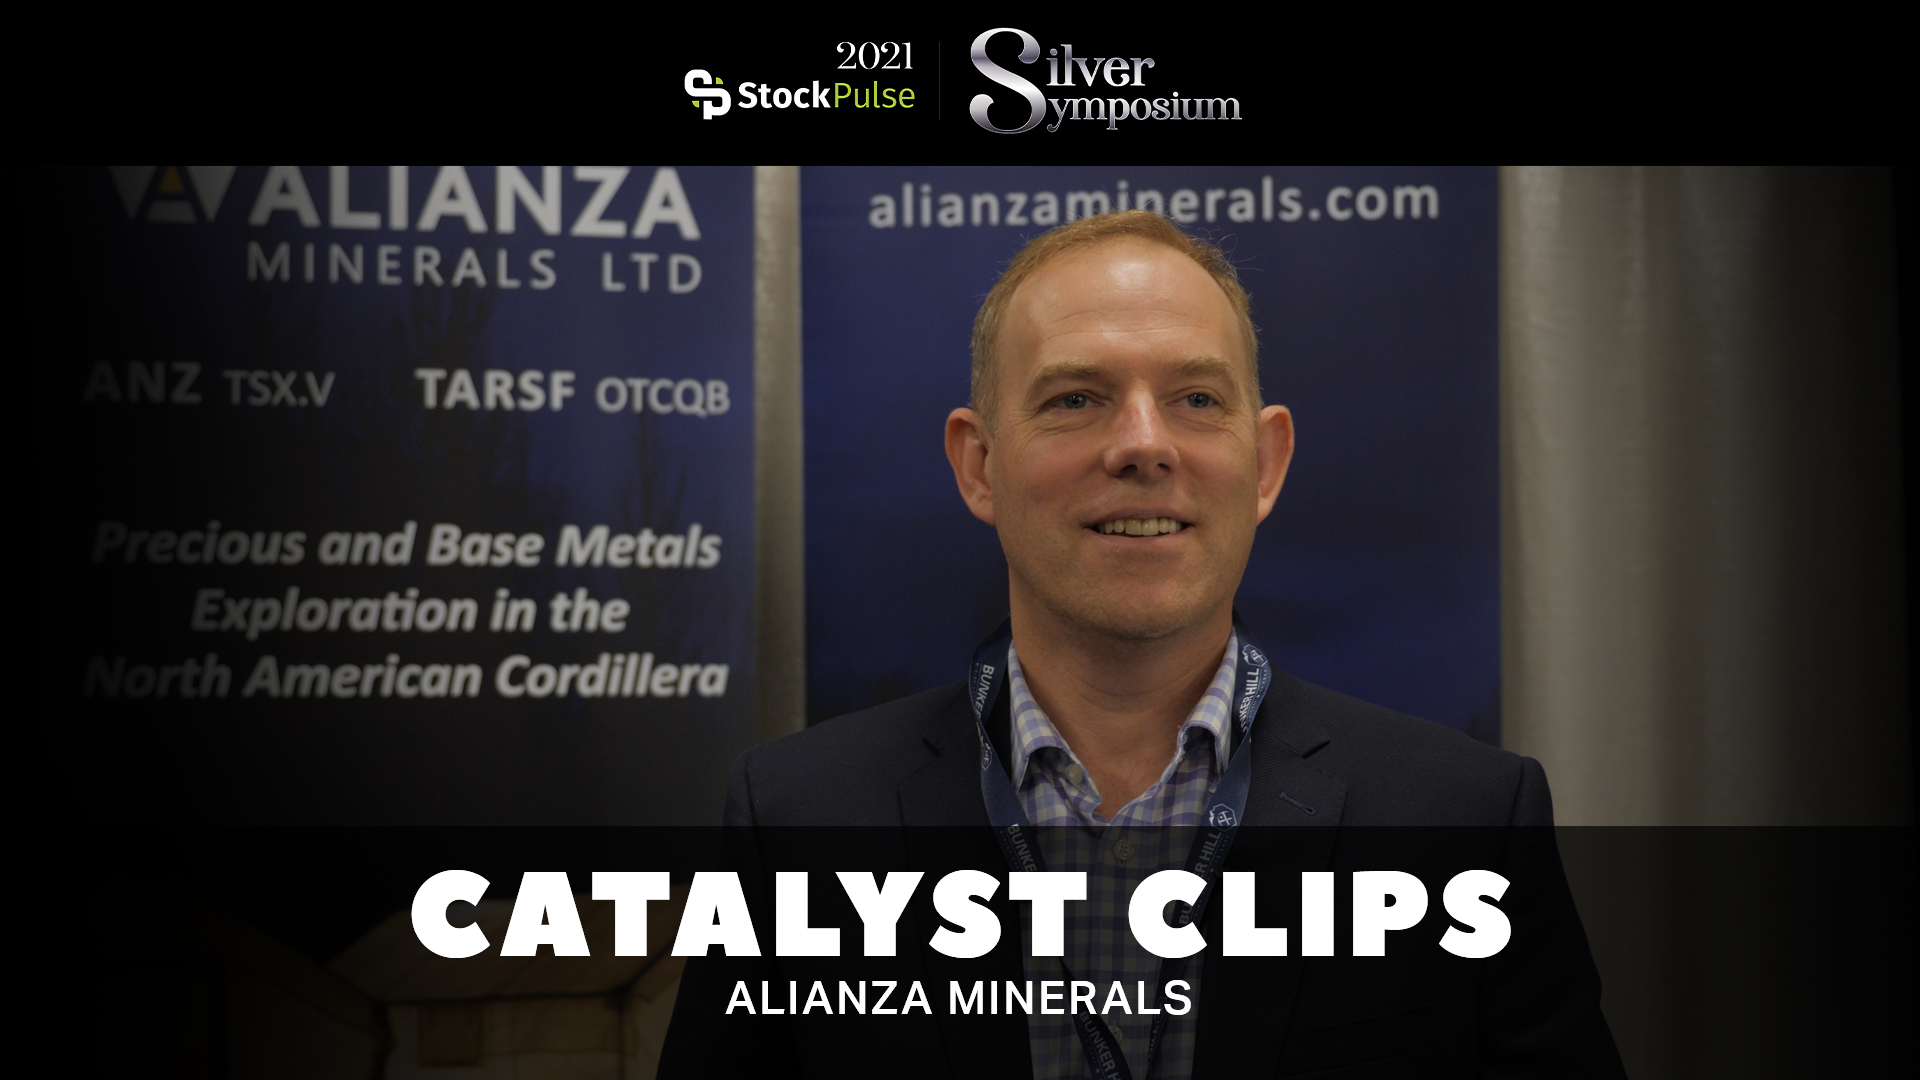 2021 StockPulse Silver Symposium Catalyst Clips | Jason Weber of Alianza Minerals